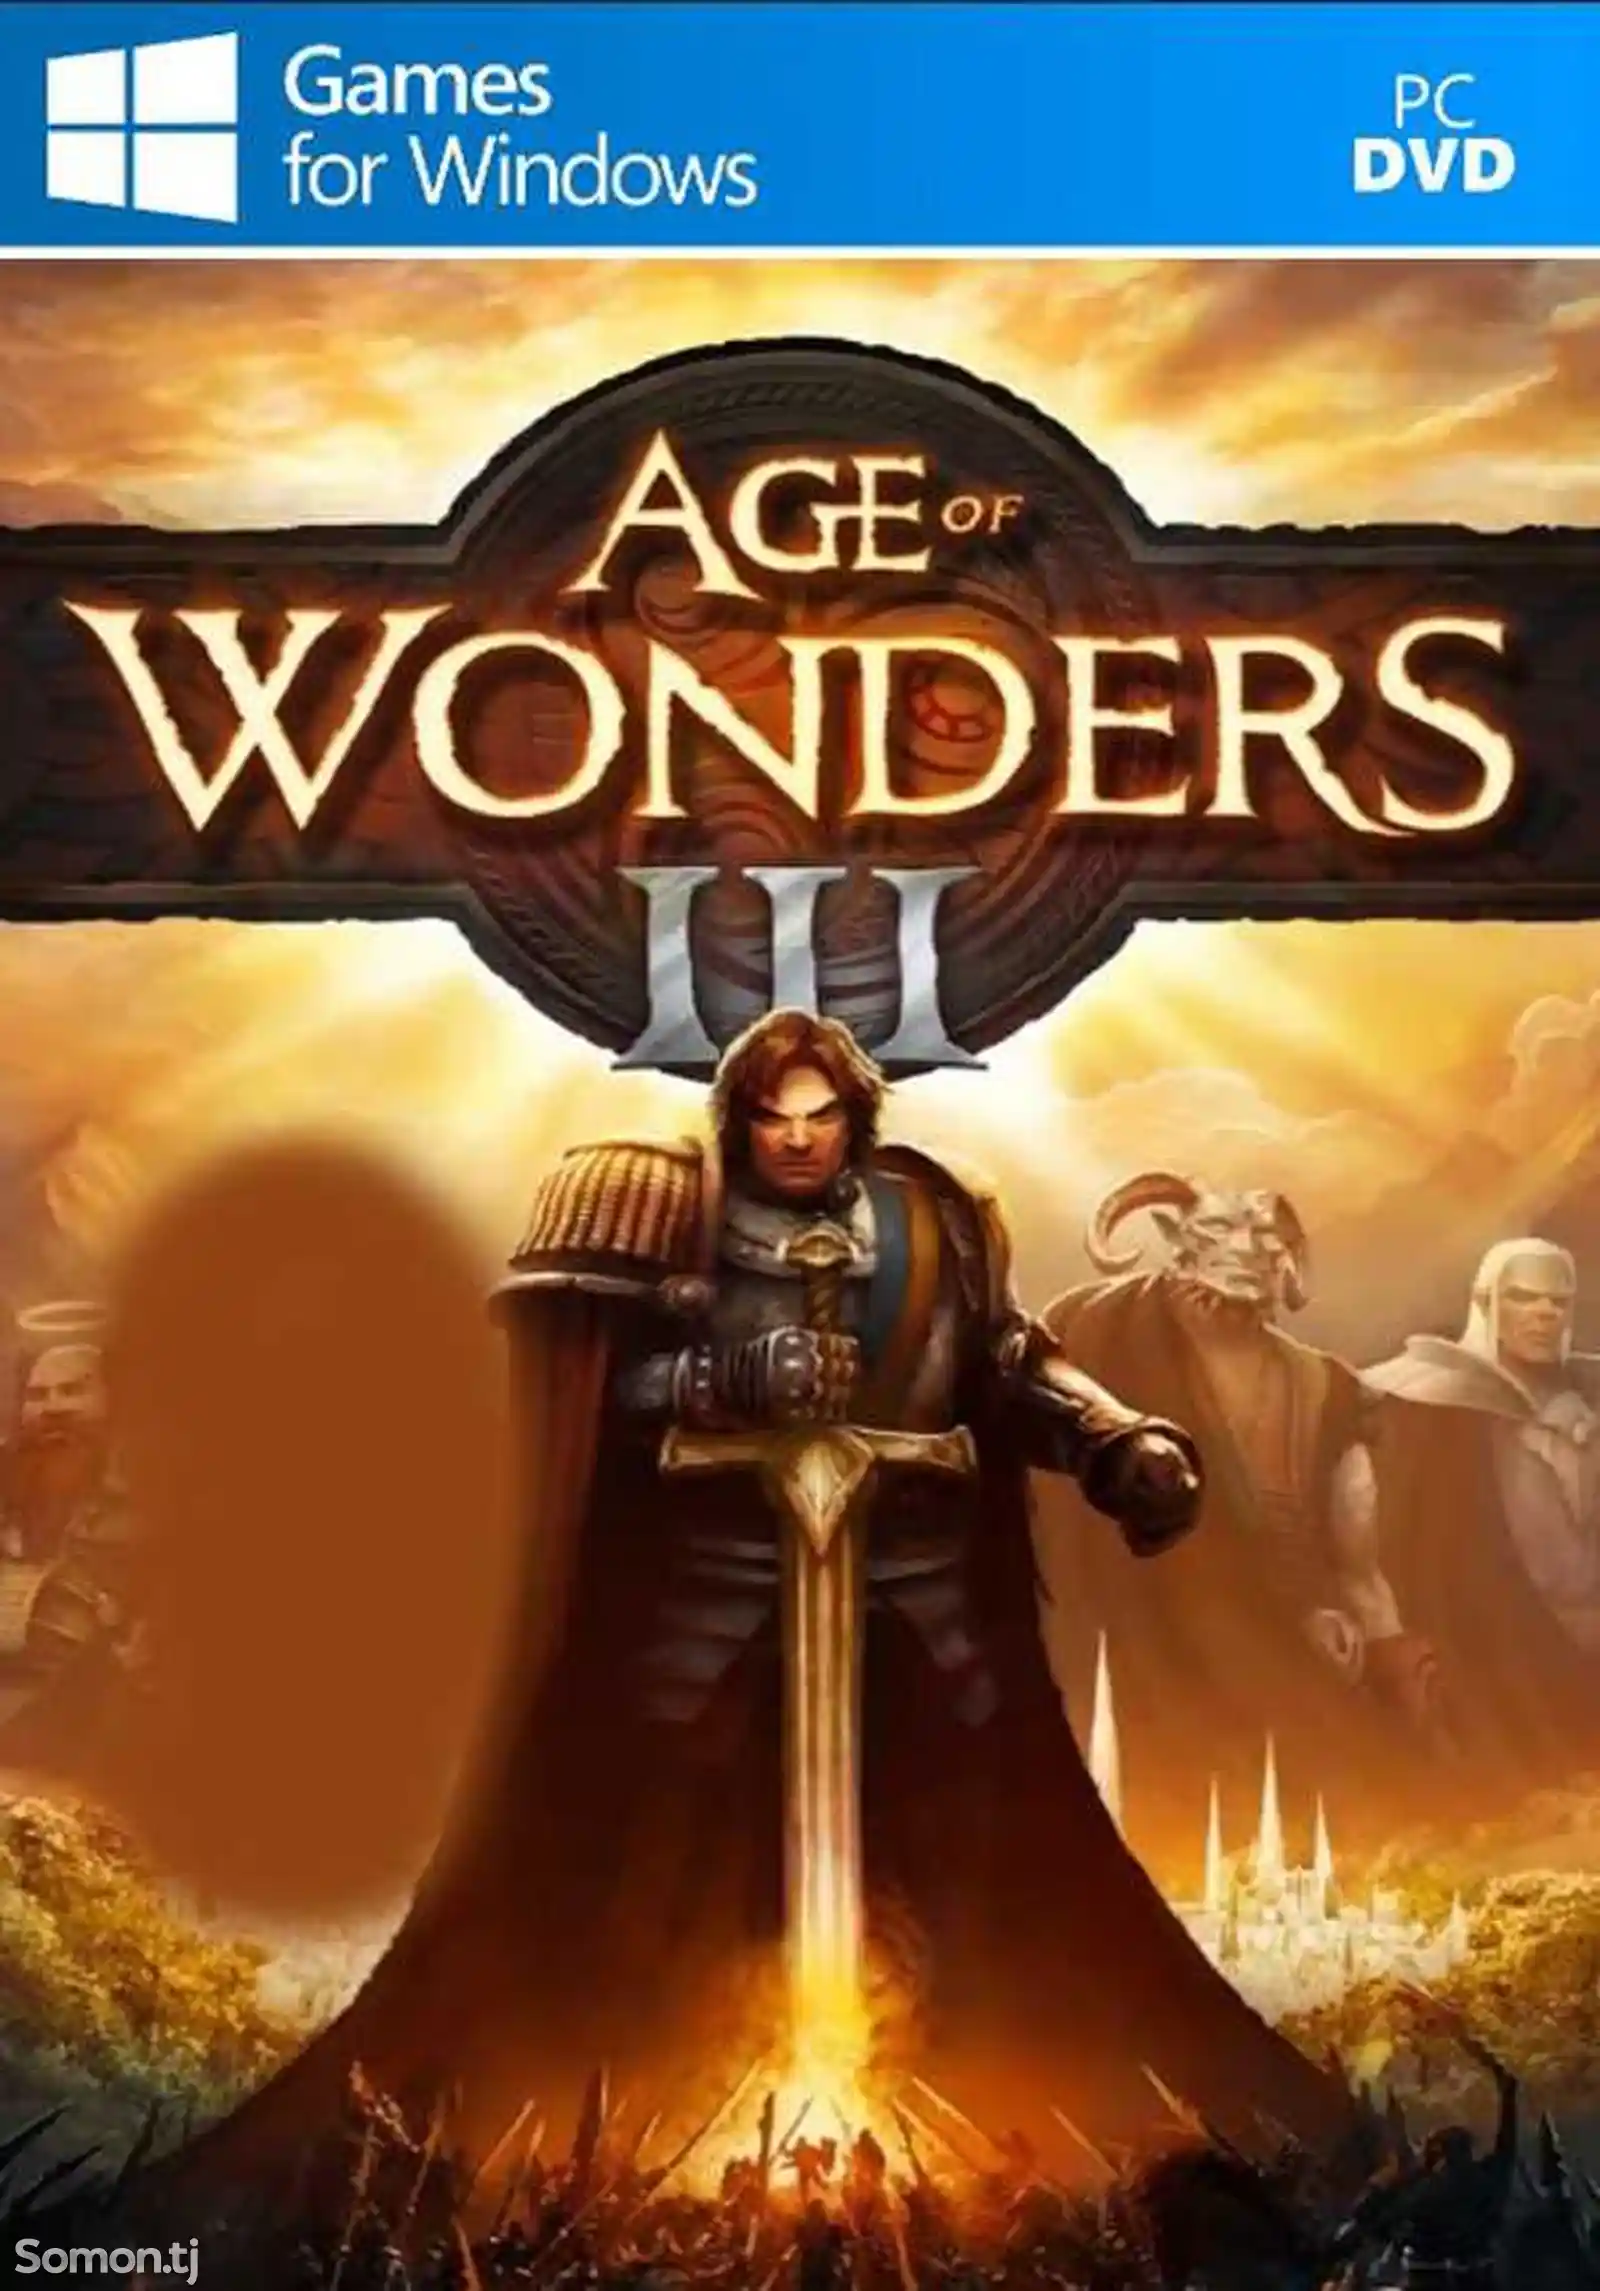 Игра Age of wonders 3 для компьютера-пк-pc-1